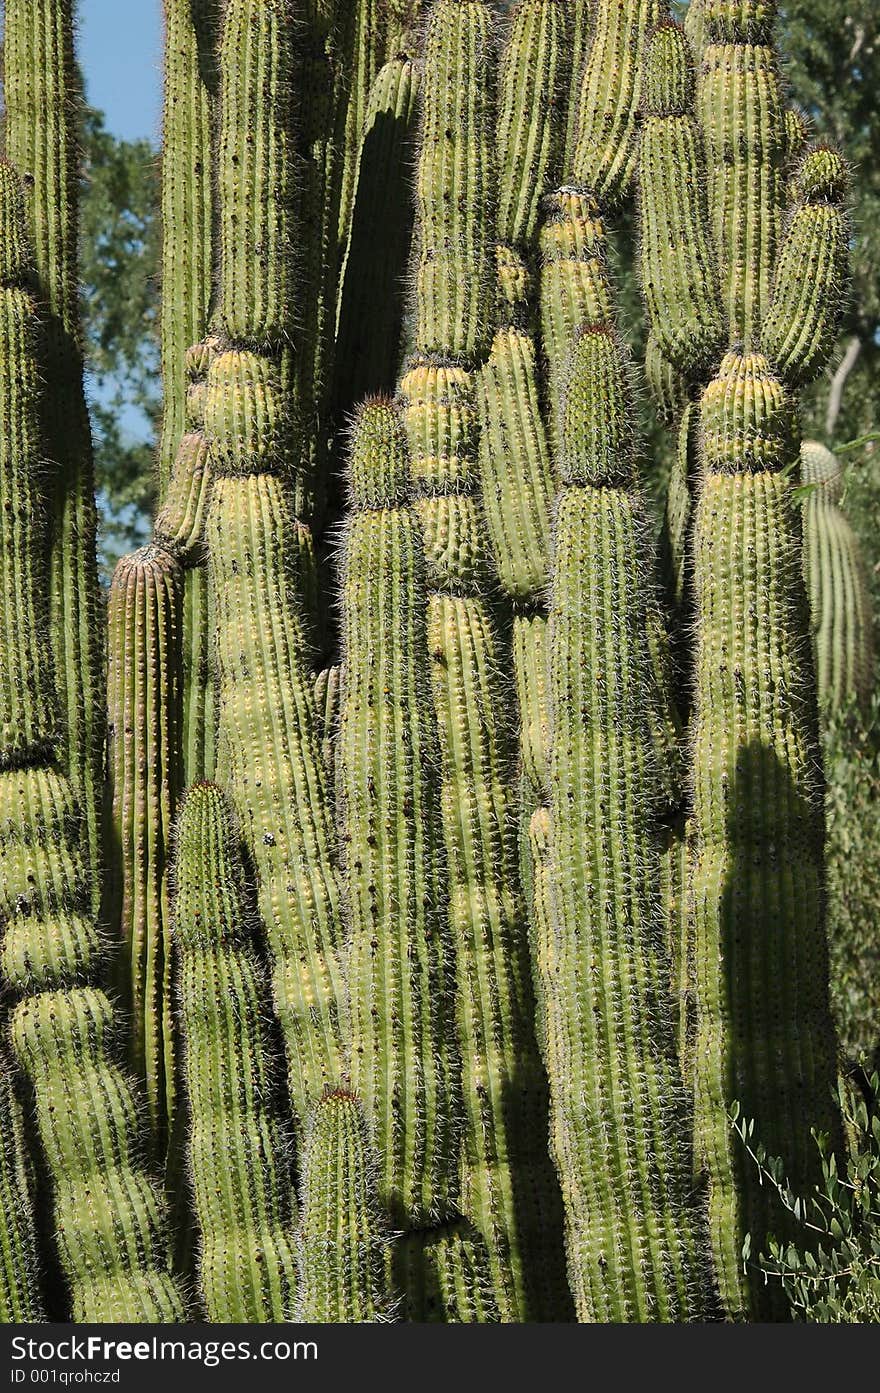 Organ pipe cactus as background